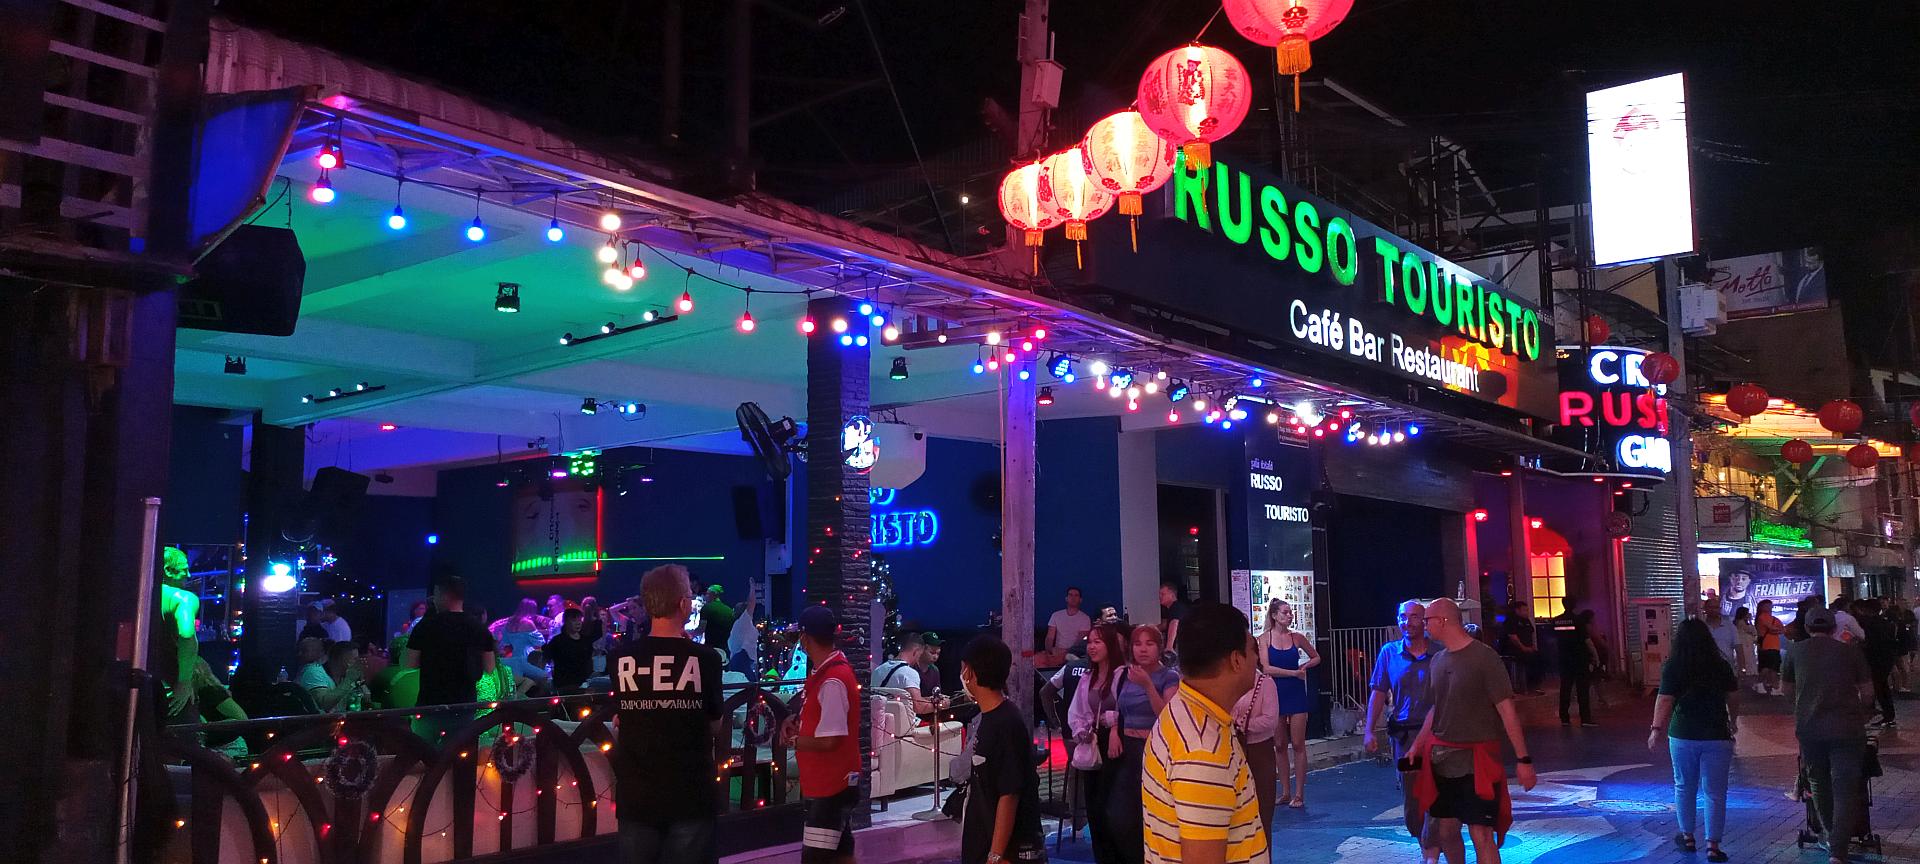 Russo Touristo, Walking Street Pattaya